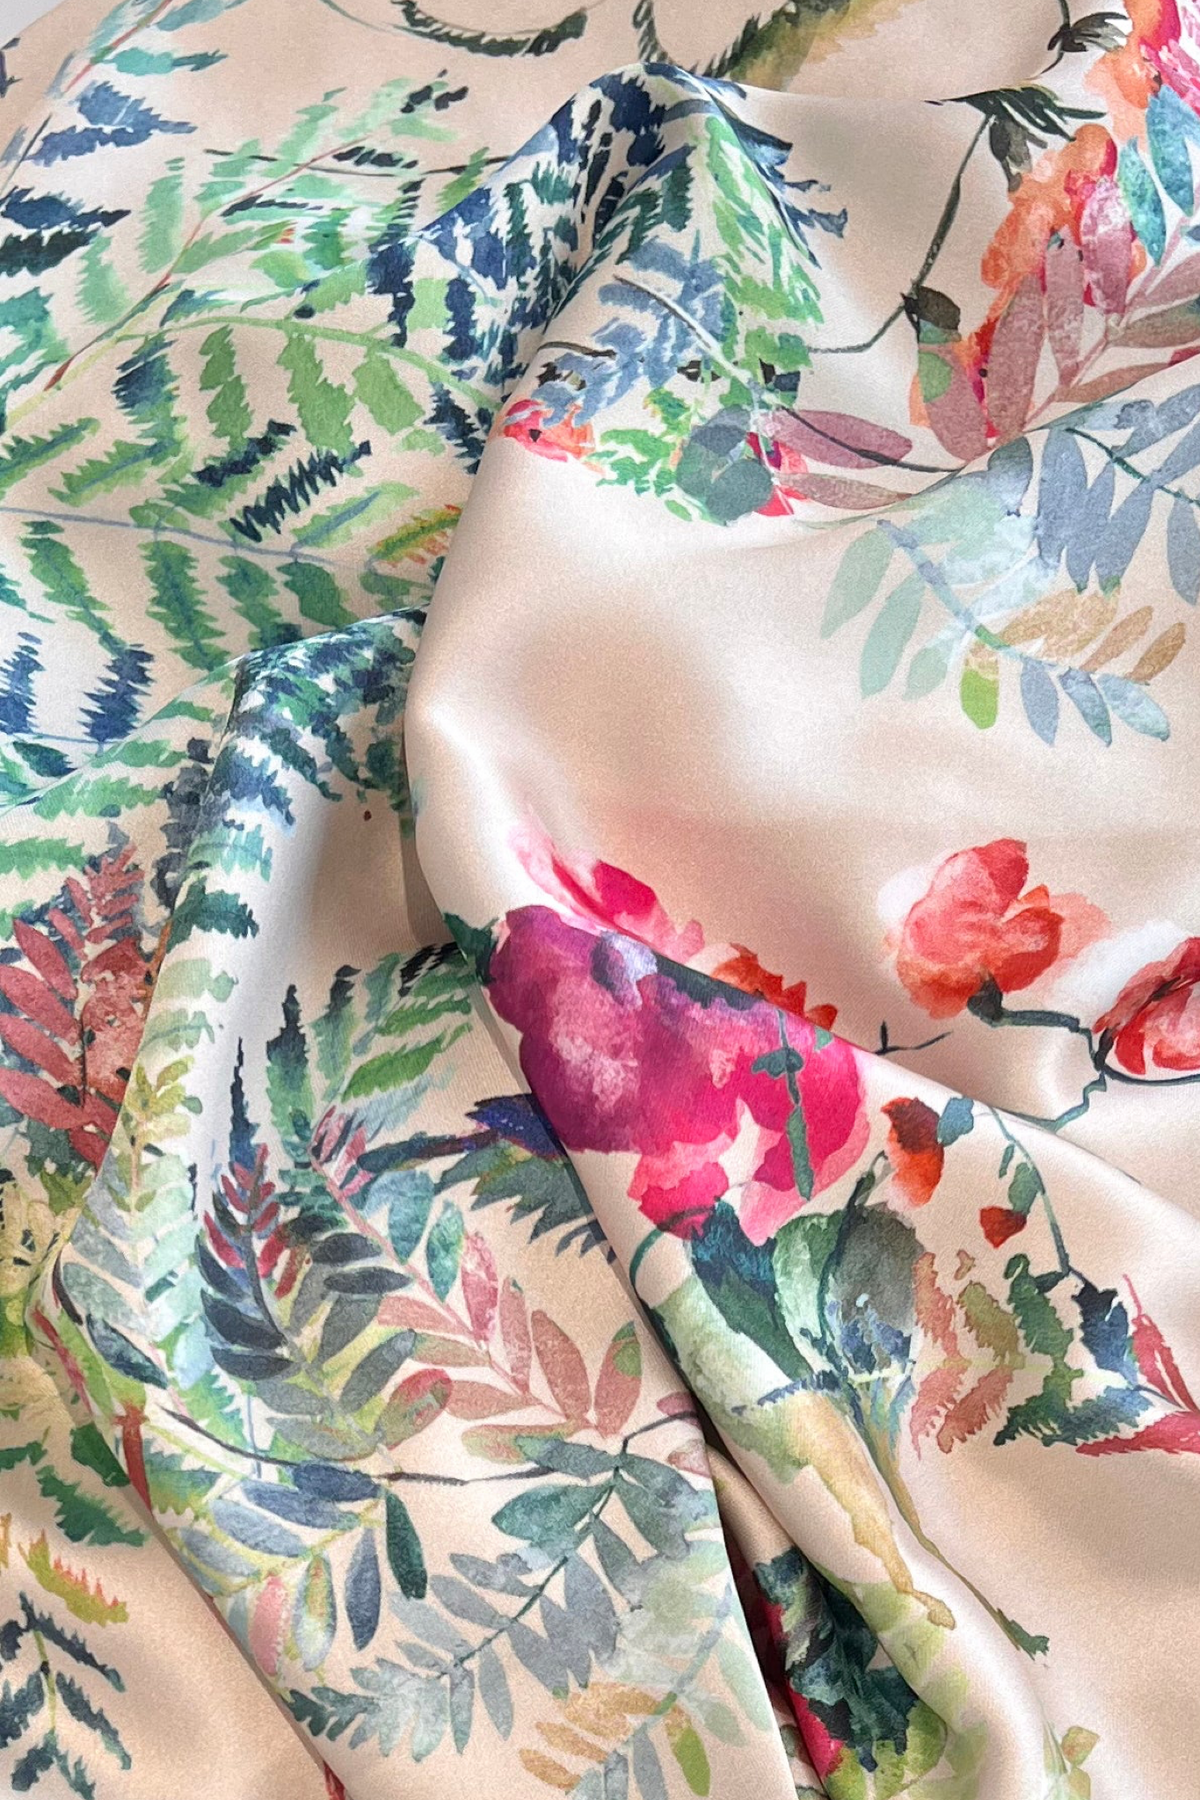 Caribbean Floral Print in Cream - Fabric Close Up - Harleen Kaur